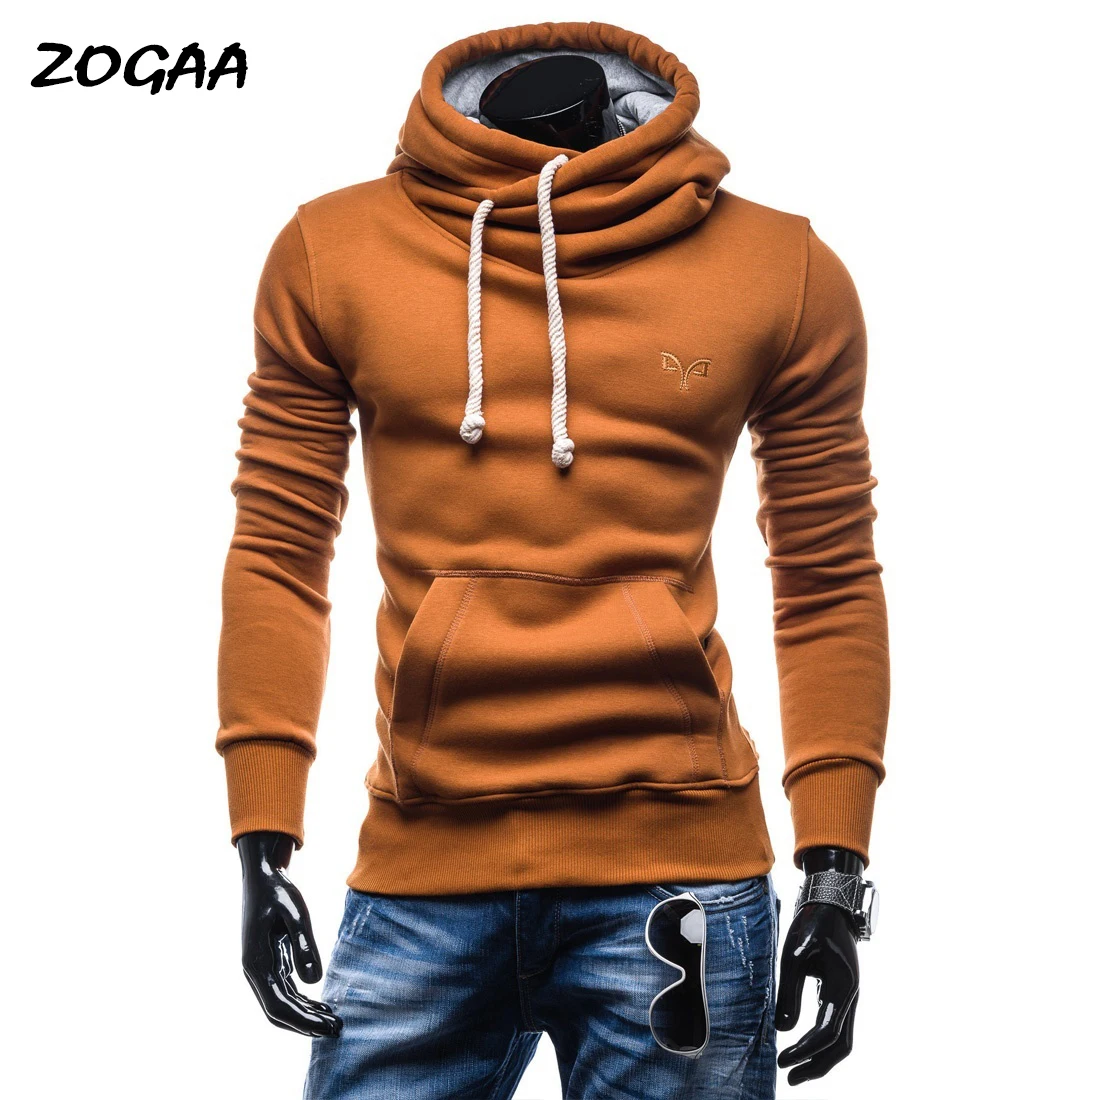 

ZOGAA Spring Autumn Hoodies Men Fashion Brand Pullover Solid Color Turtleneck Sportswear Sweatshirt Men'S Tracksuits New